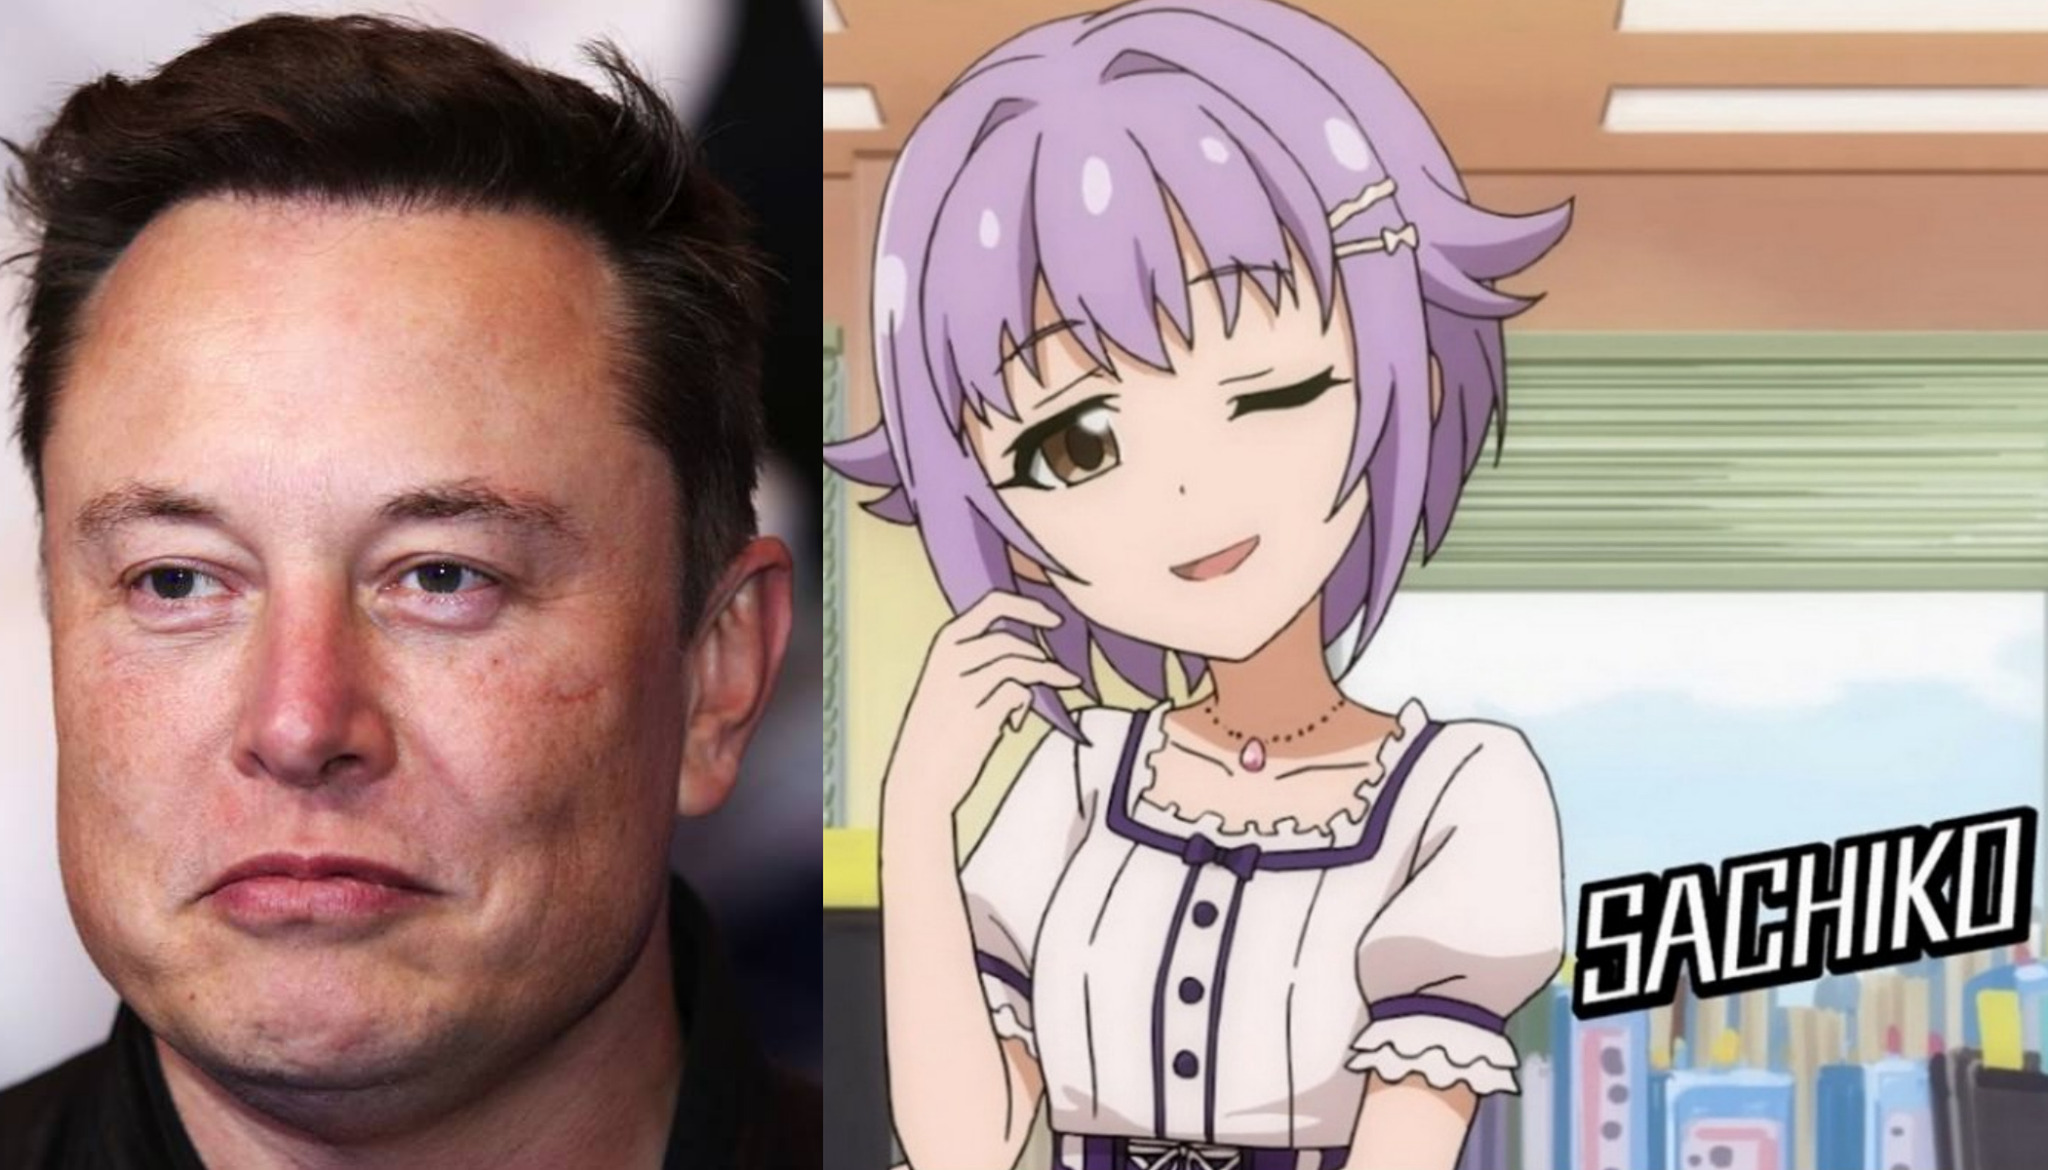 Elon and Sachiko thumbnail